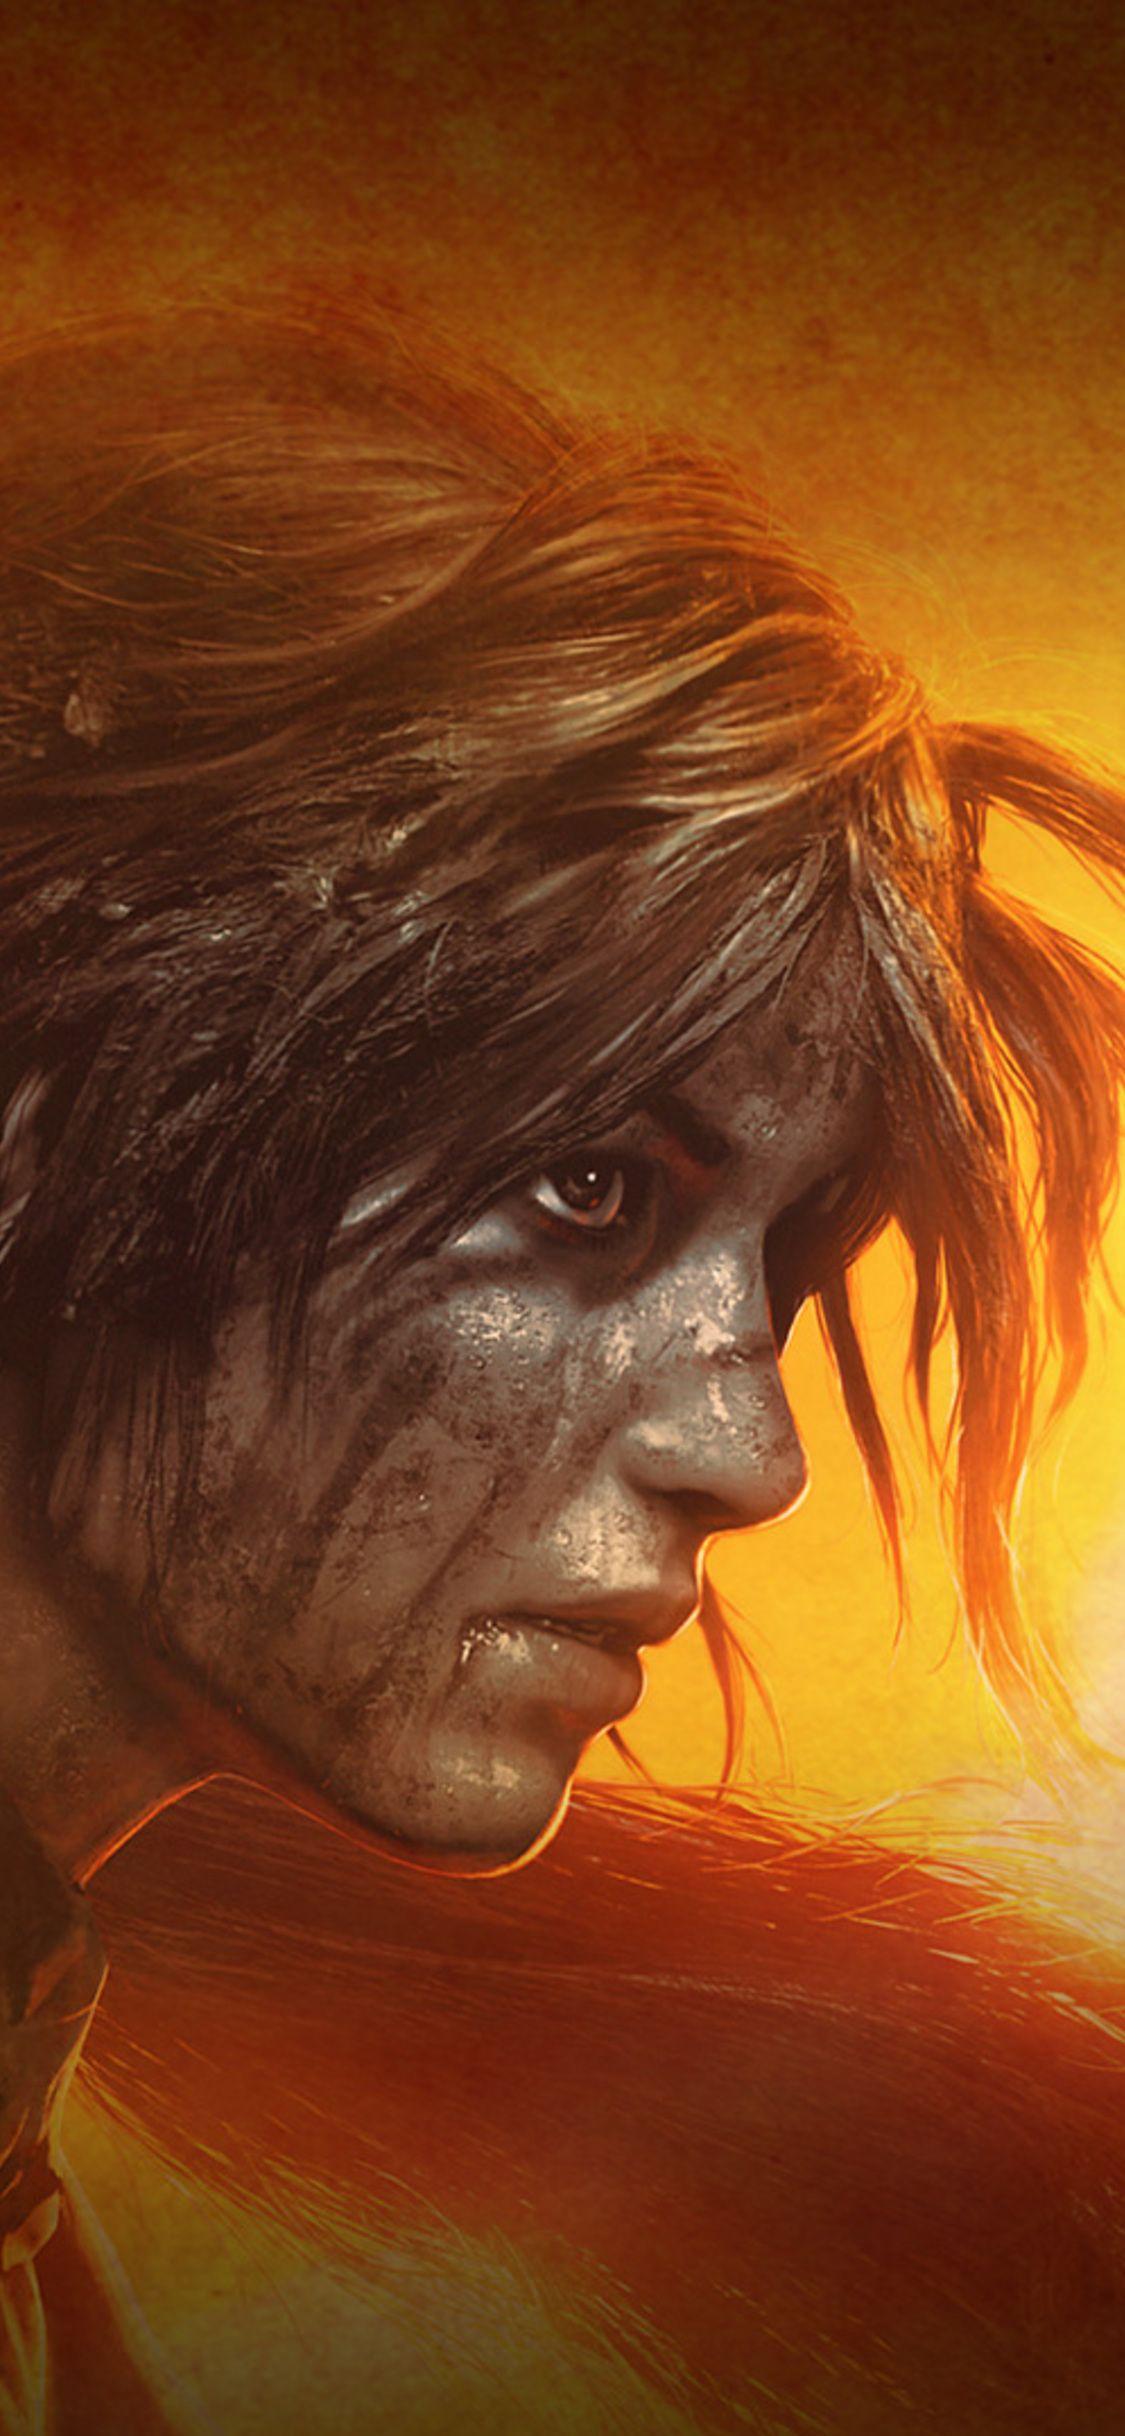 Lara Croft Shadow Of The Tomb Raider iPhone XS, iPhone 10